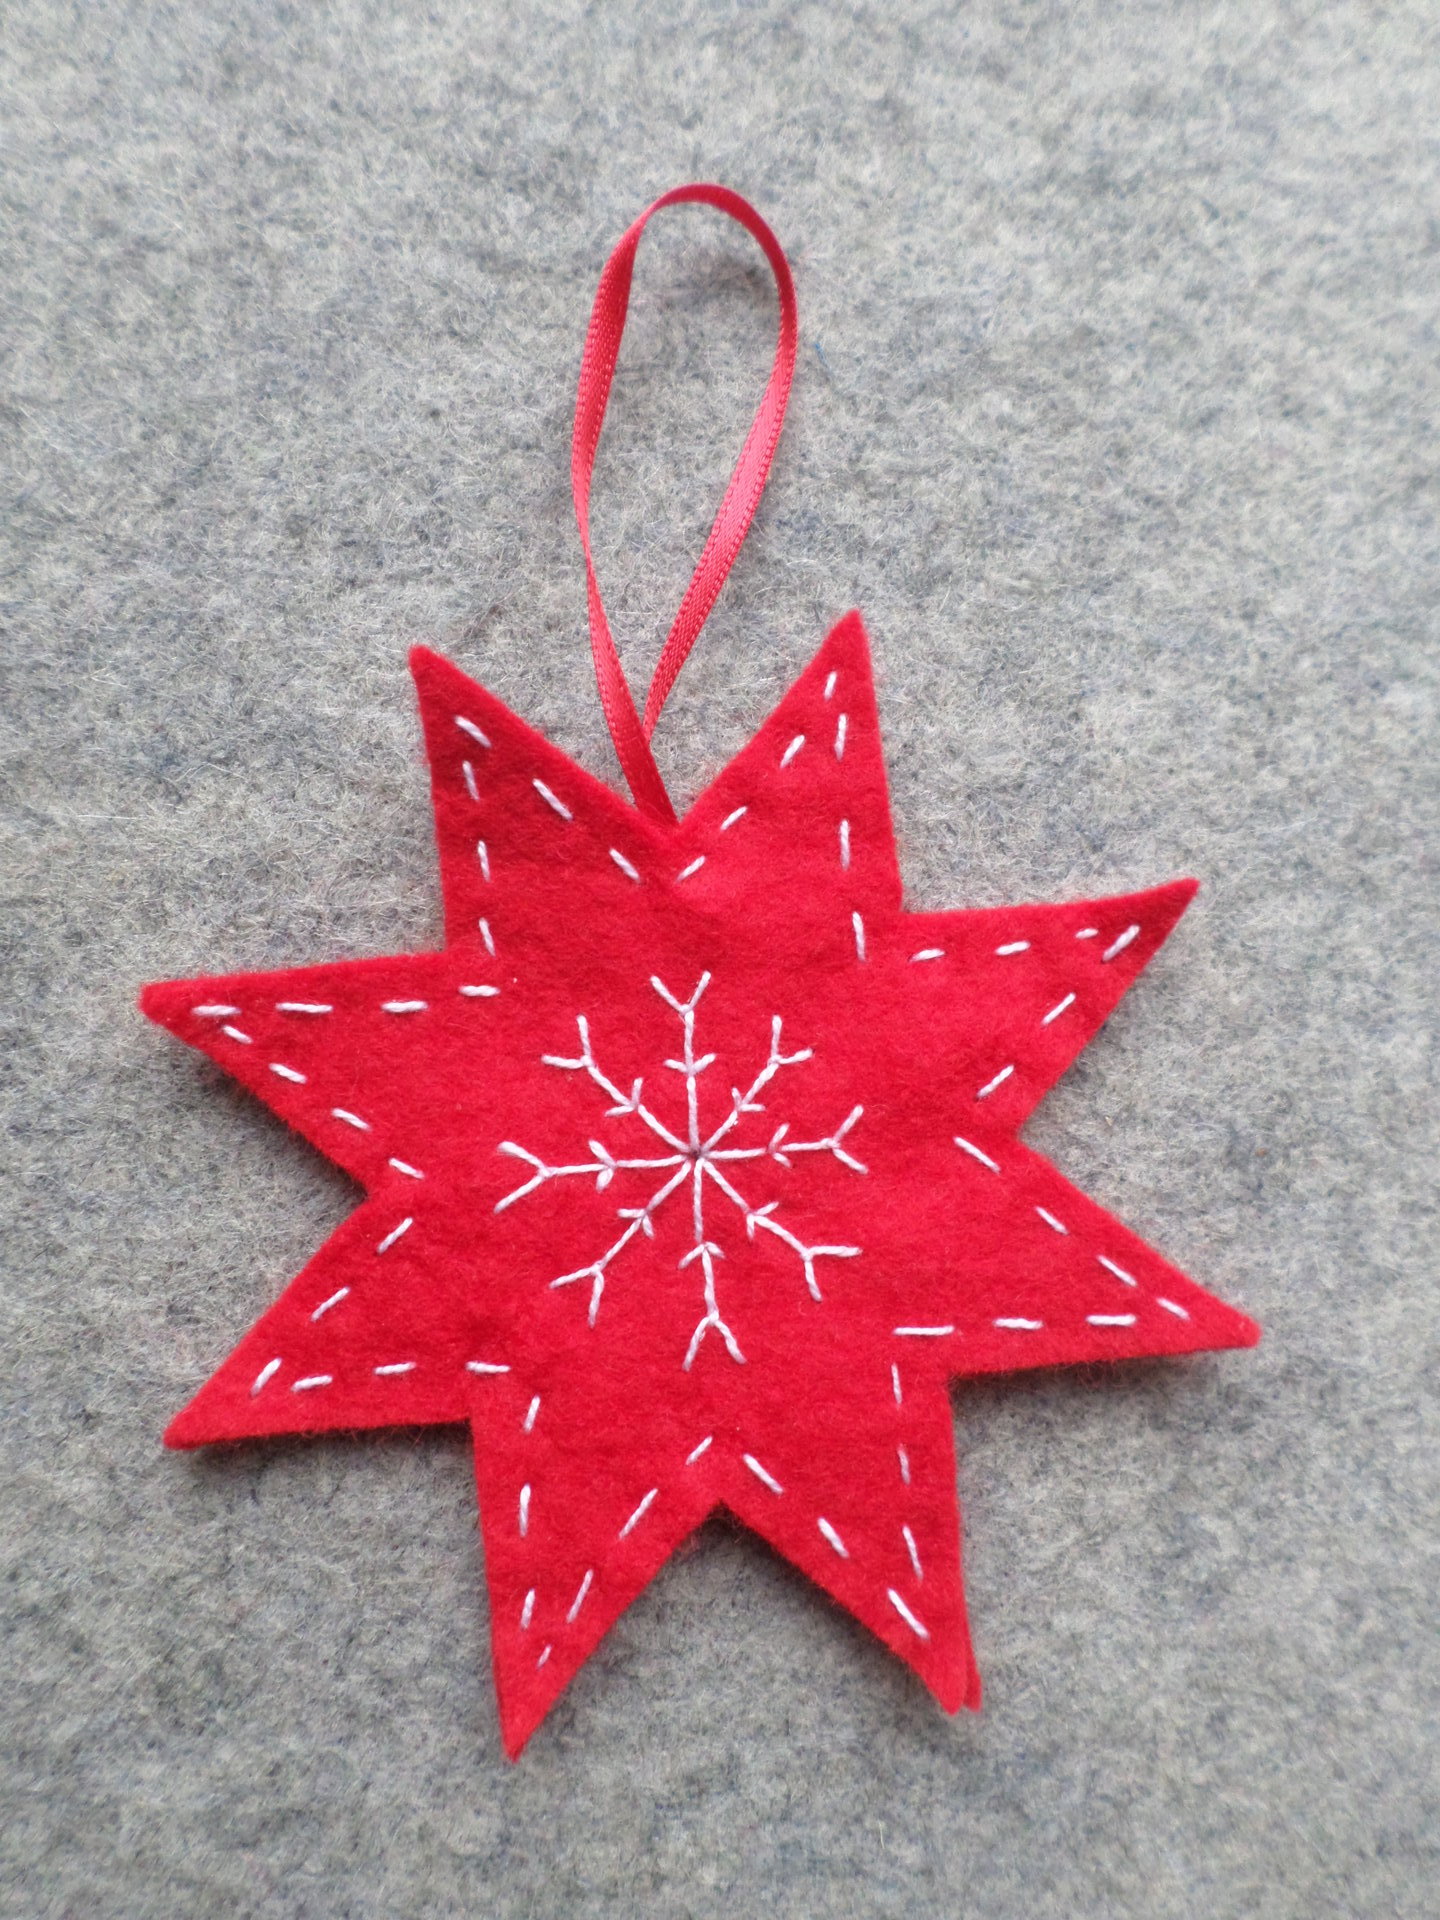 8 Point Star Felt Ornament DIY Kit 